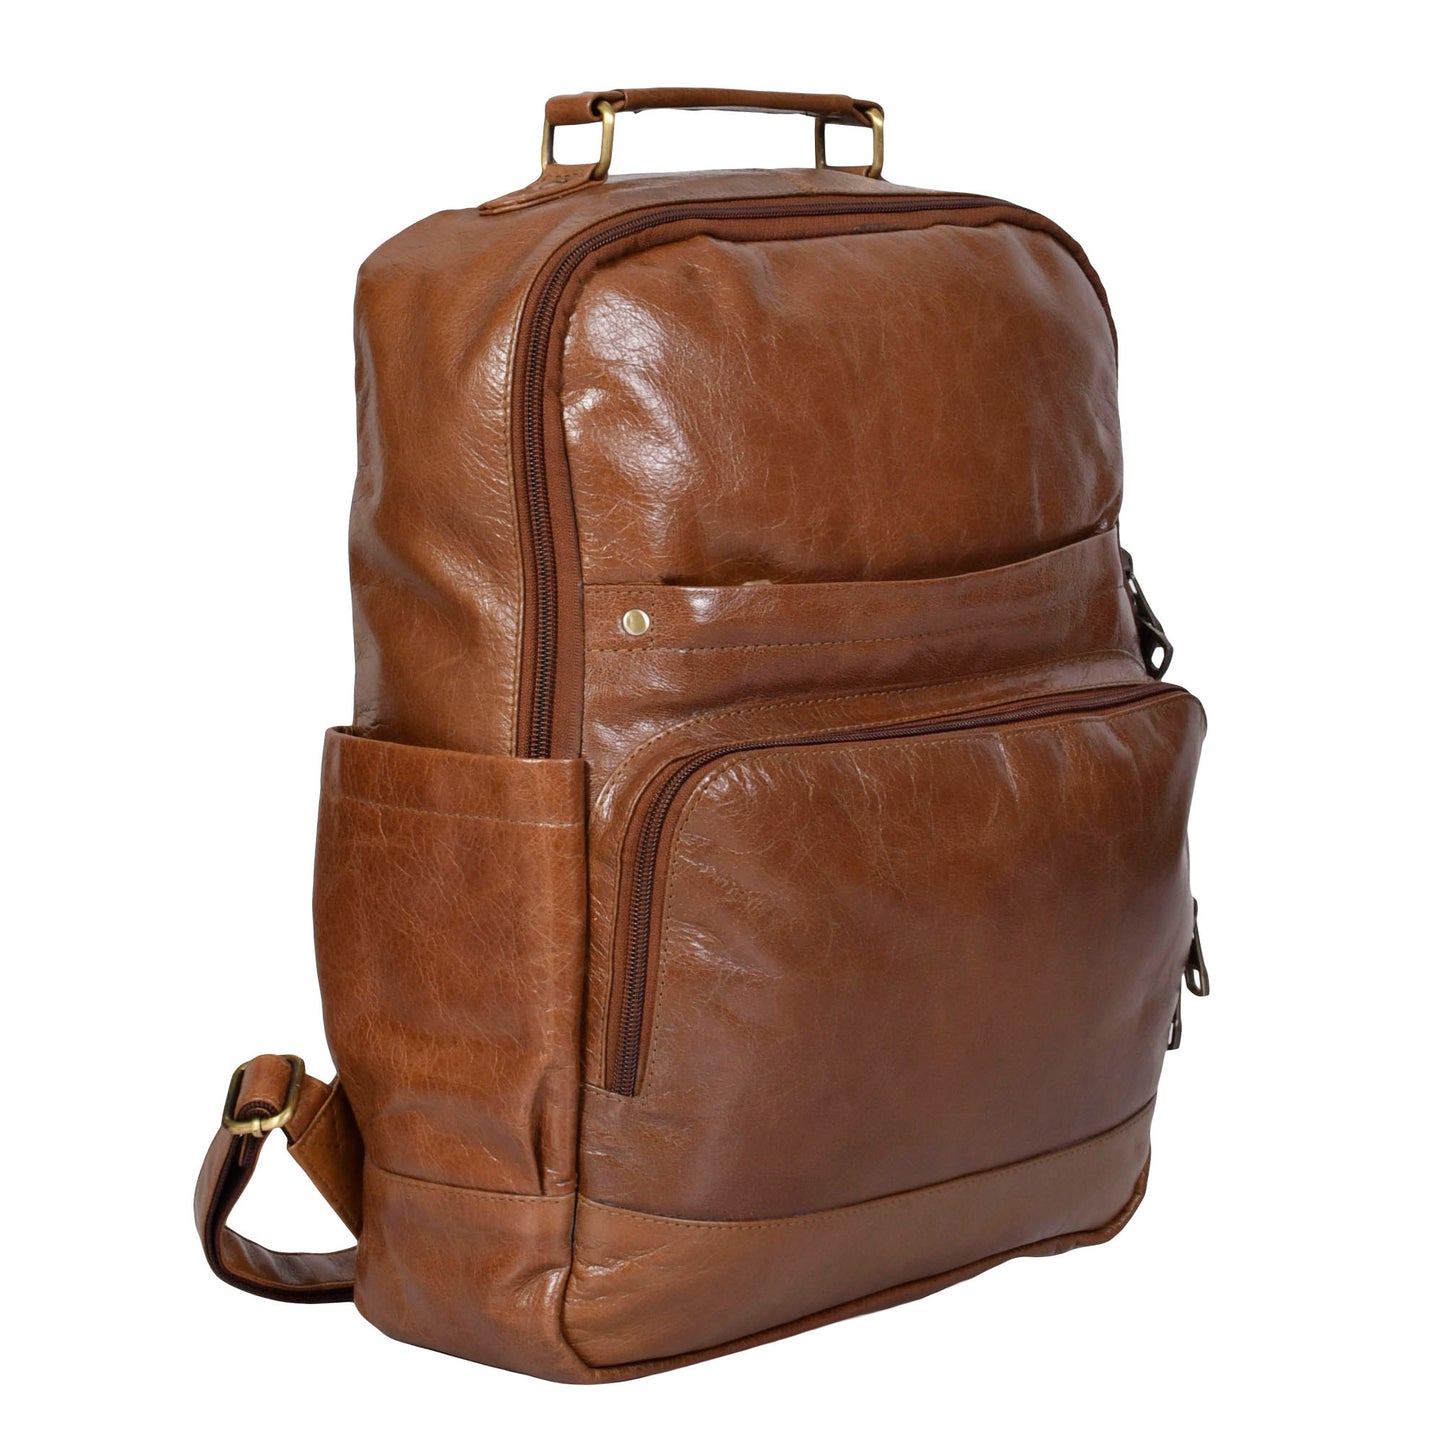 Leather backpack Minimal in Tan brown